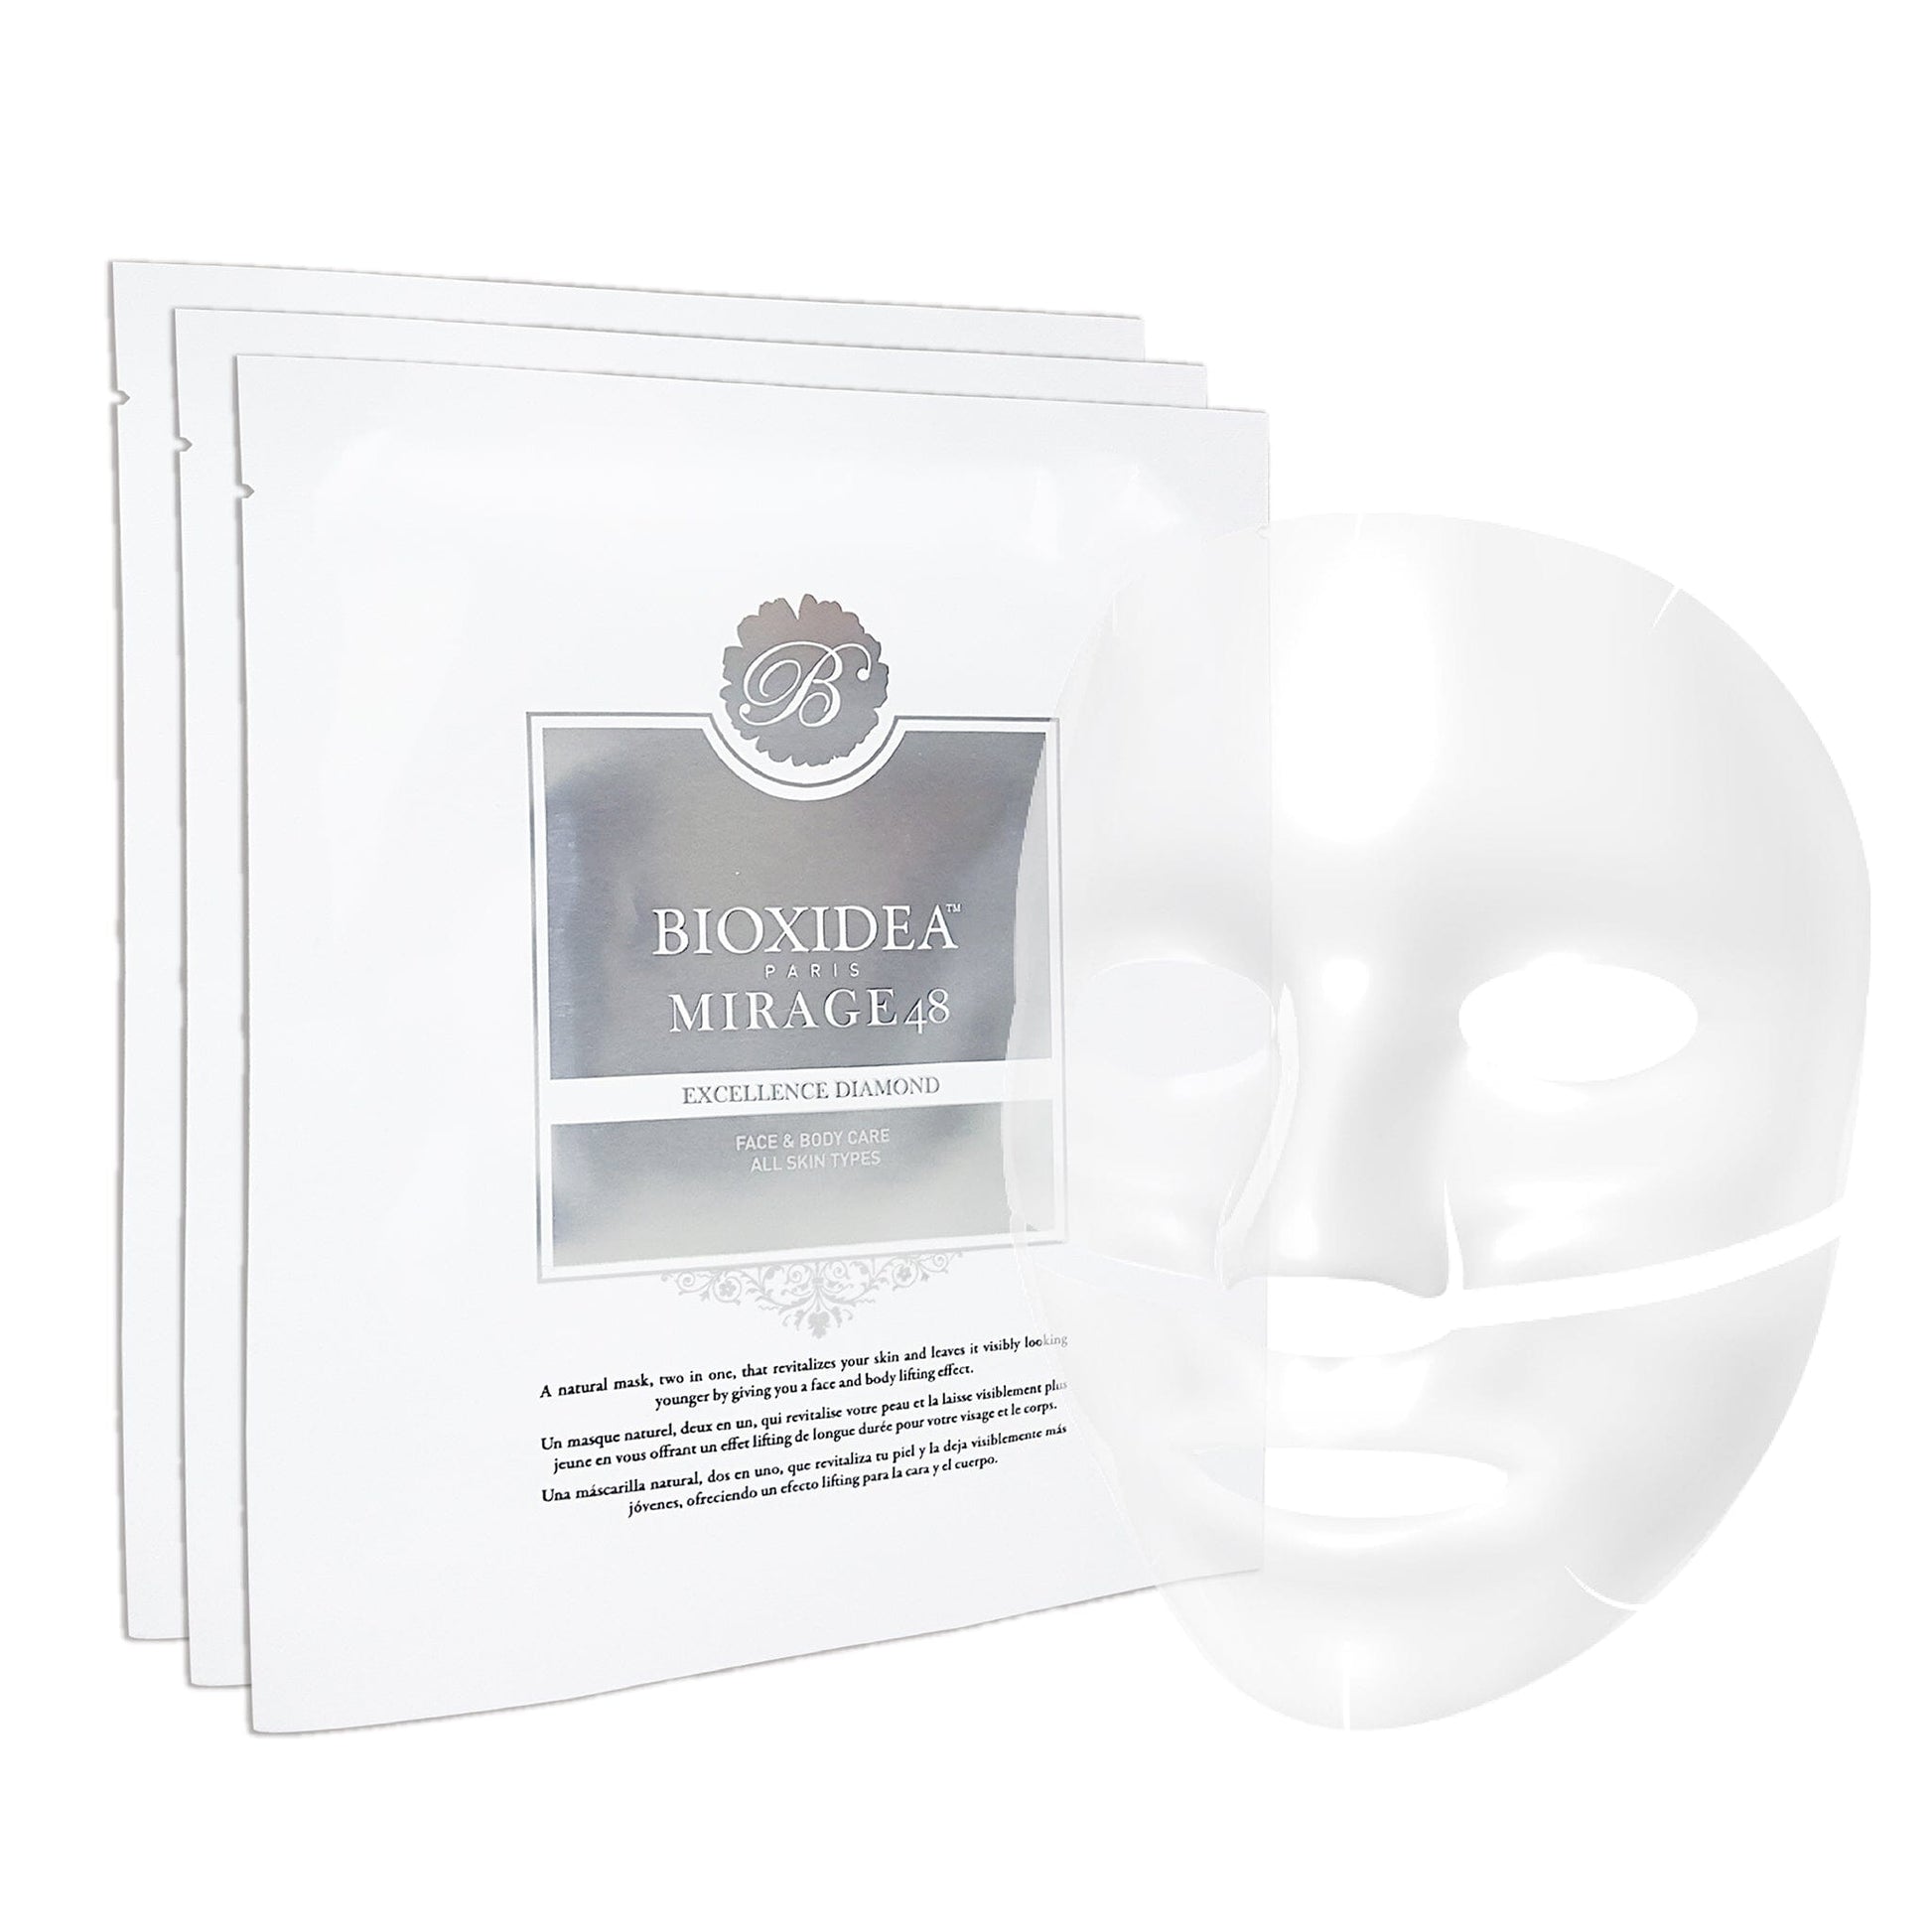 BIOXIDEA Mirage48 Excellence Diamond Face & Body Mask Mask 